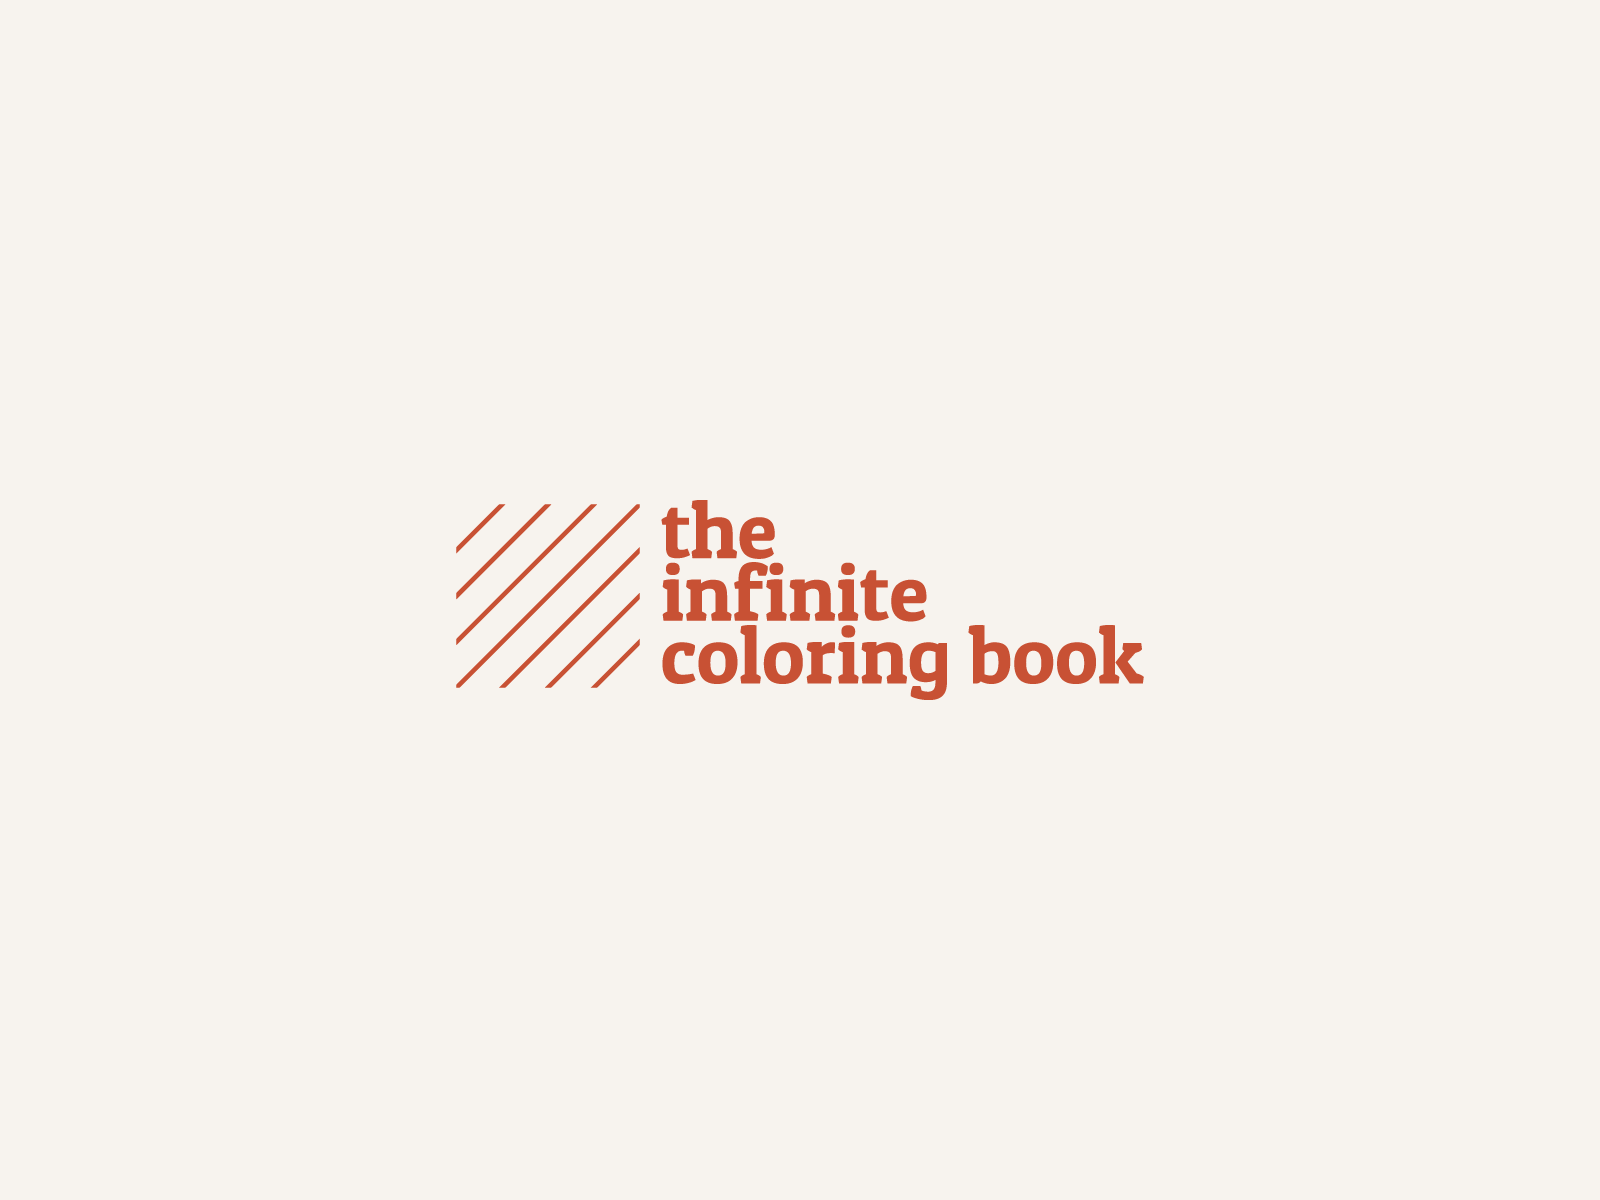 the infinite coloring book logo